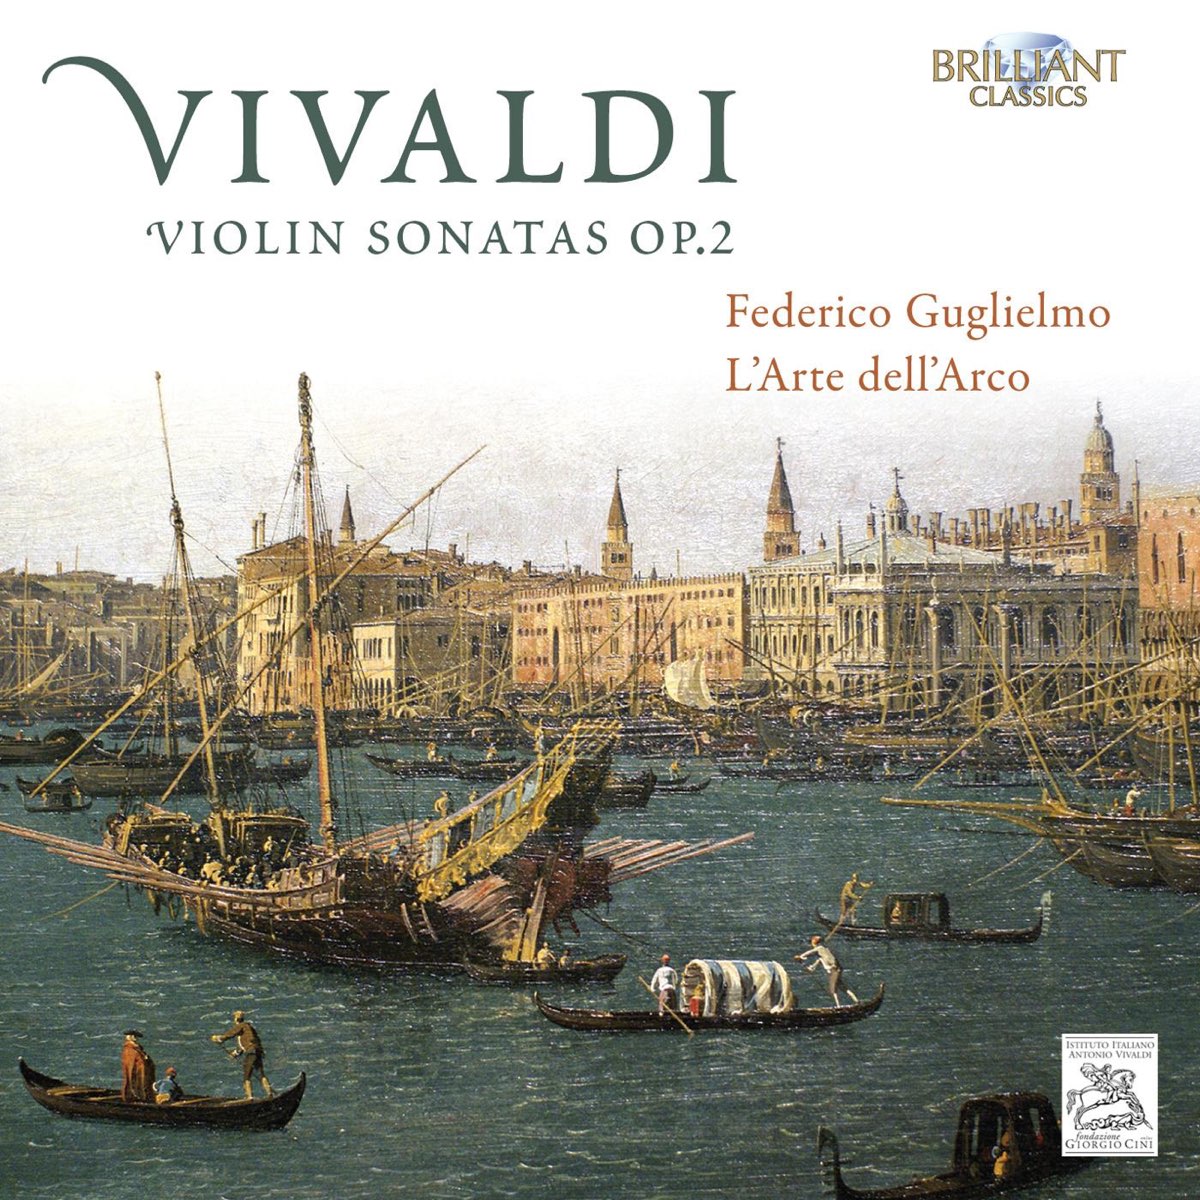 Федерико Гульельмо. Antonio Vivaldi альбомы. Vivaldi: 6 Violin Sonatas and Trios, op. 5 Federico Guglielmo. Vivaldi violin